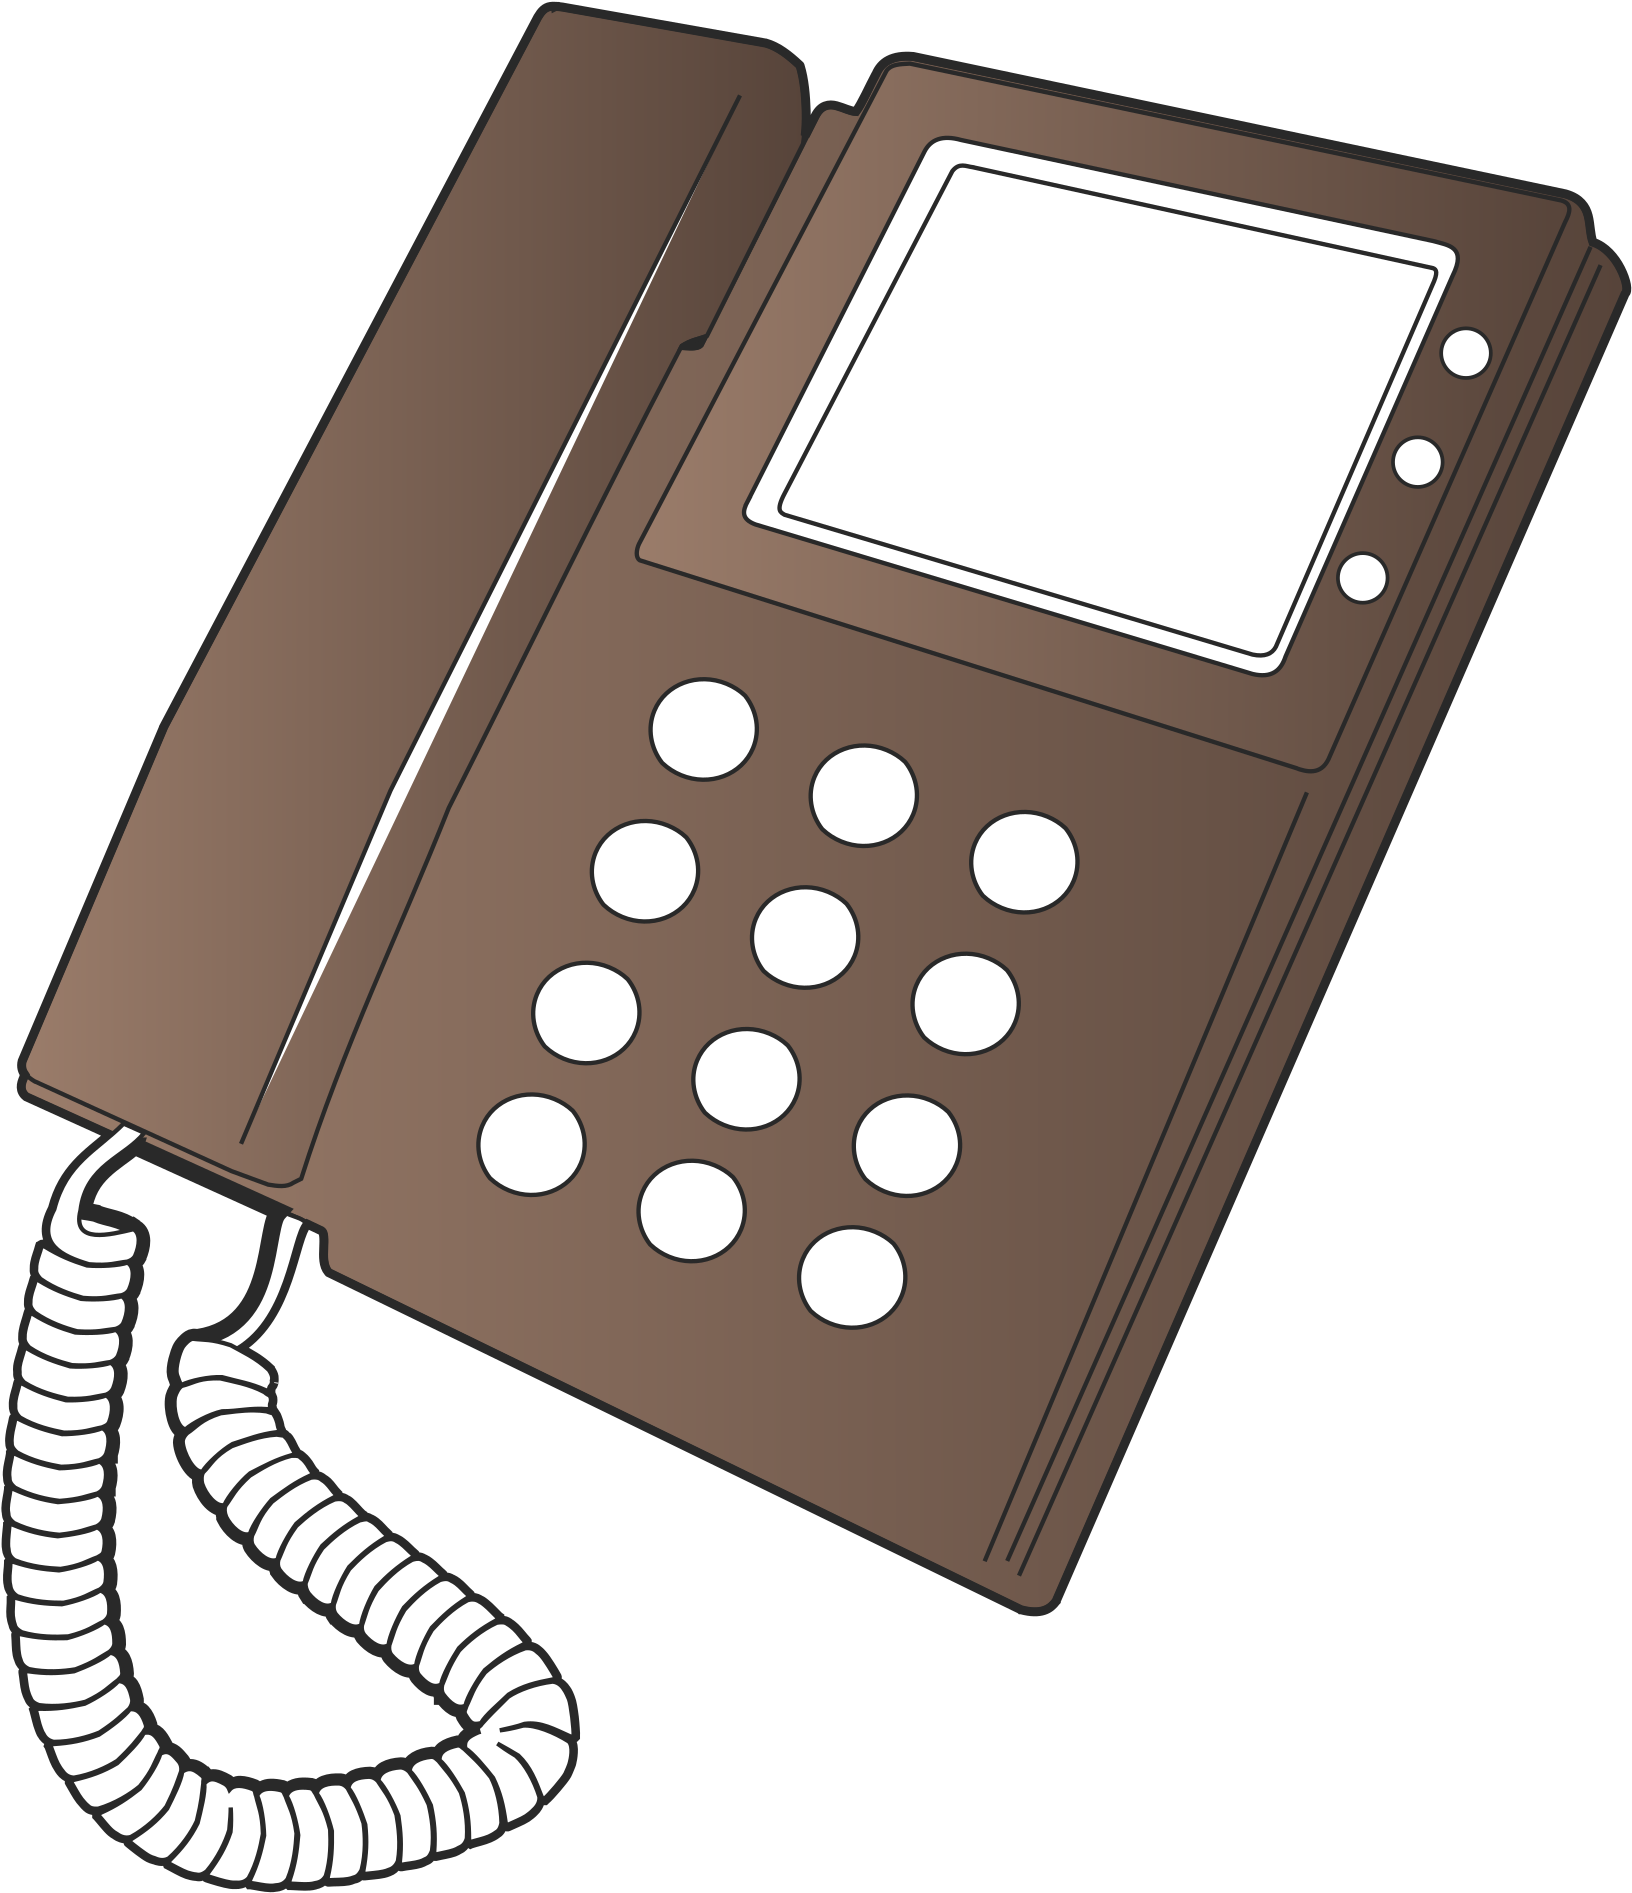 Telephone Clipart Office Desk - Telephone.